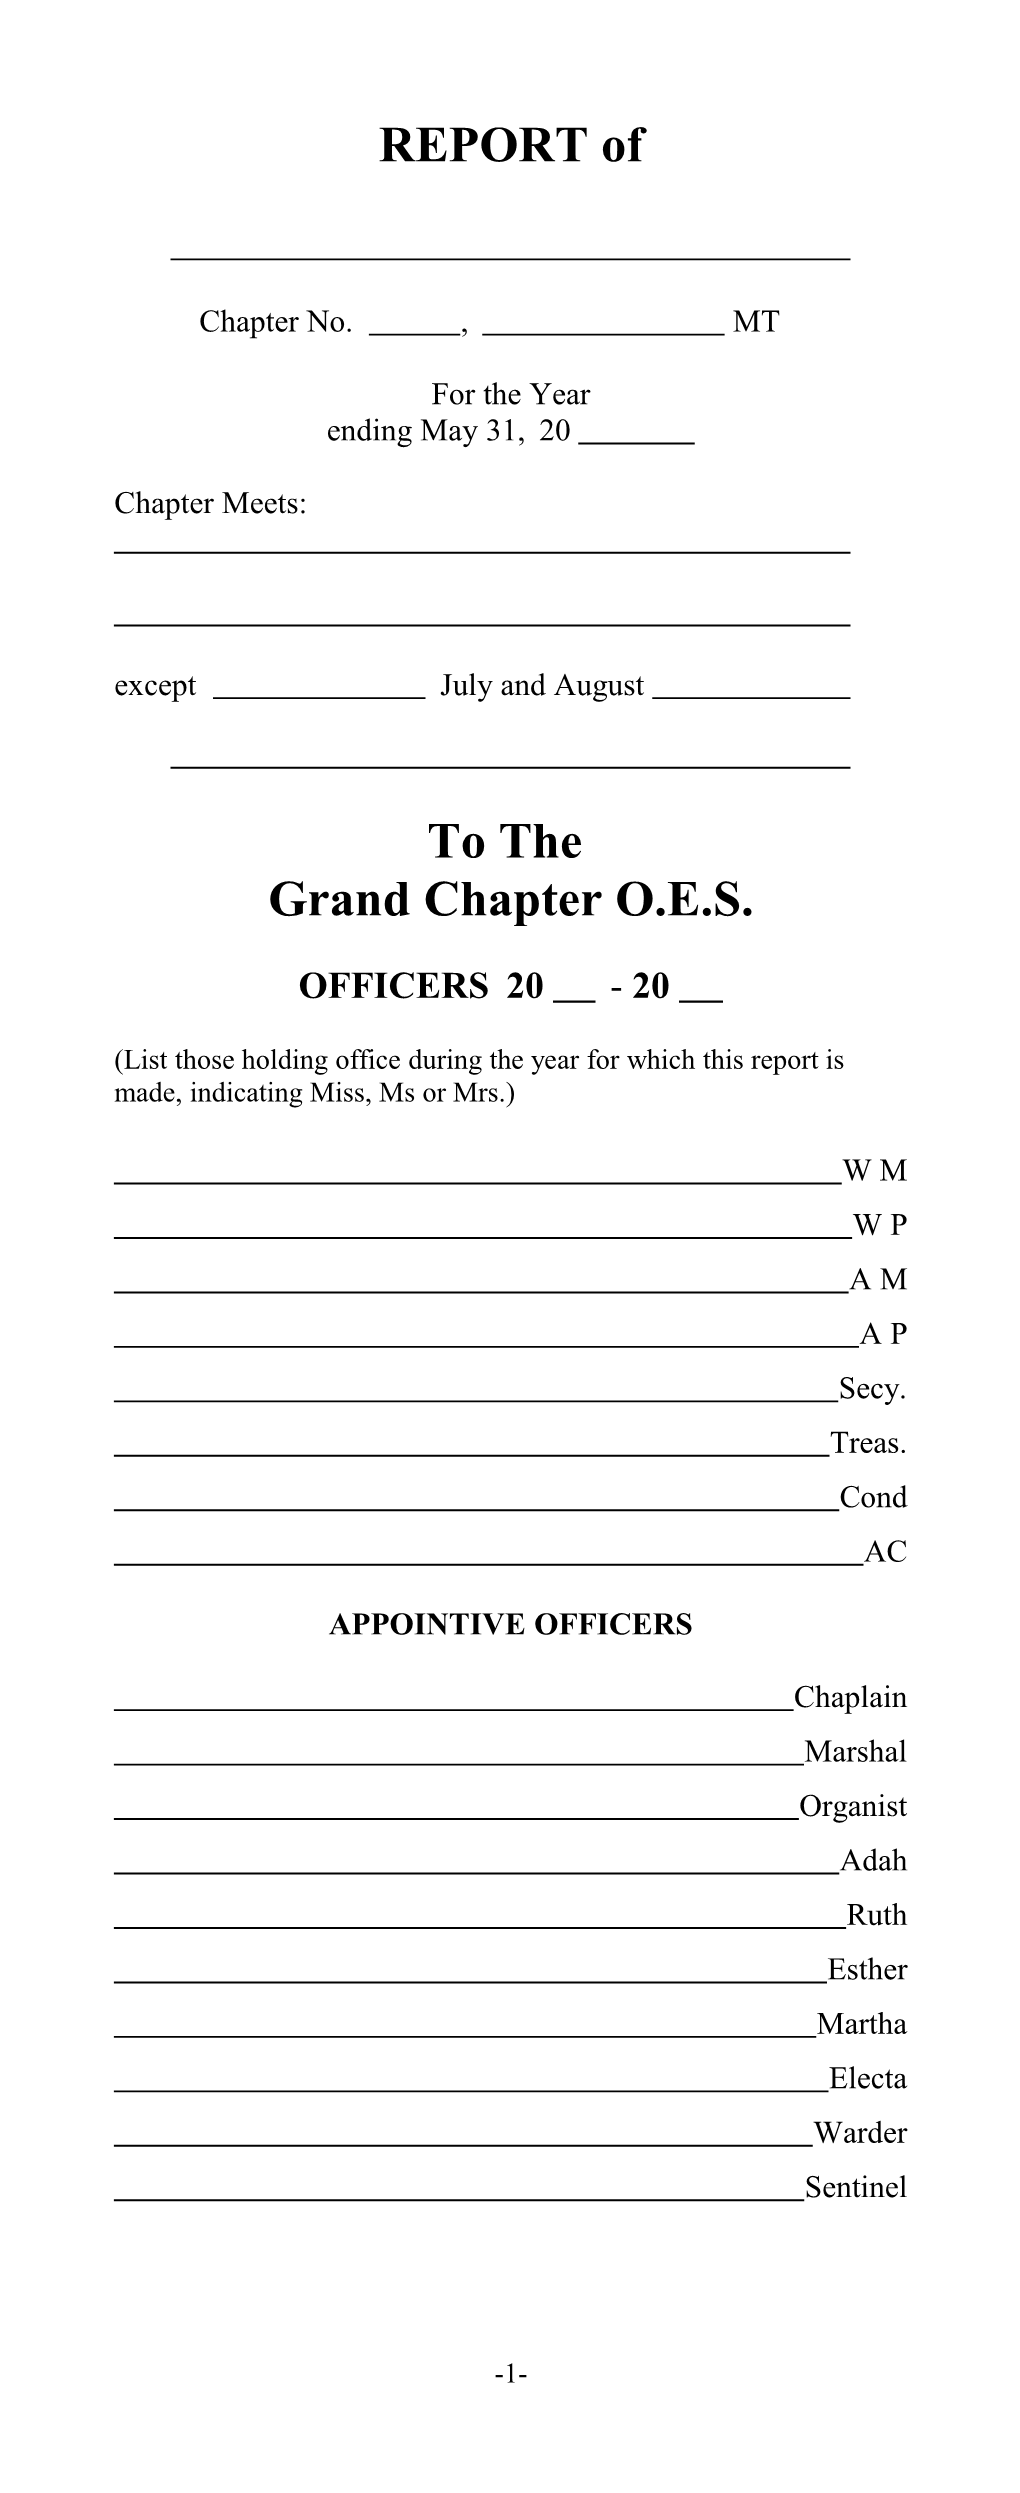 Grand Chapter O.E.S